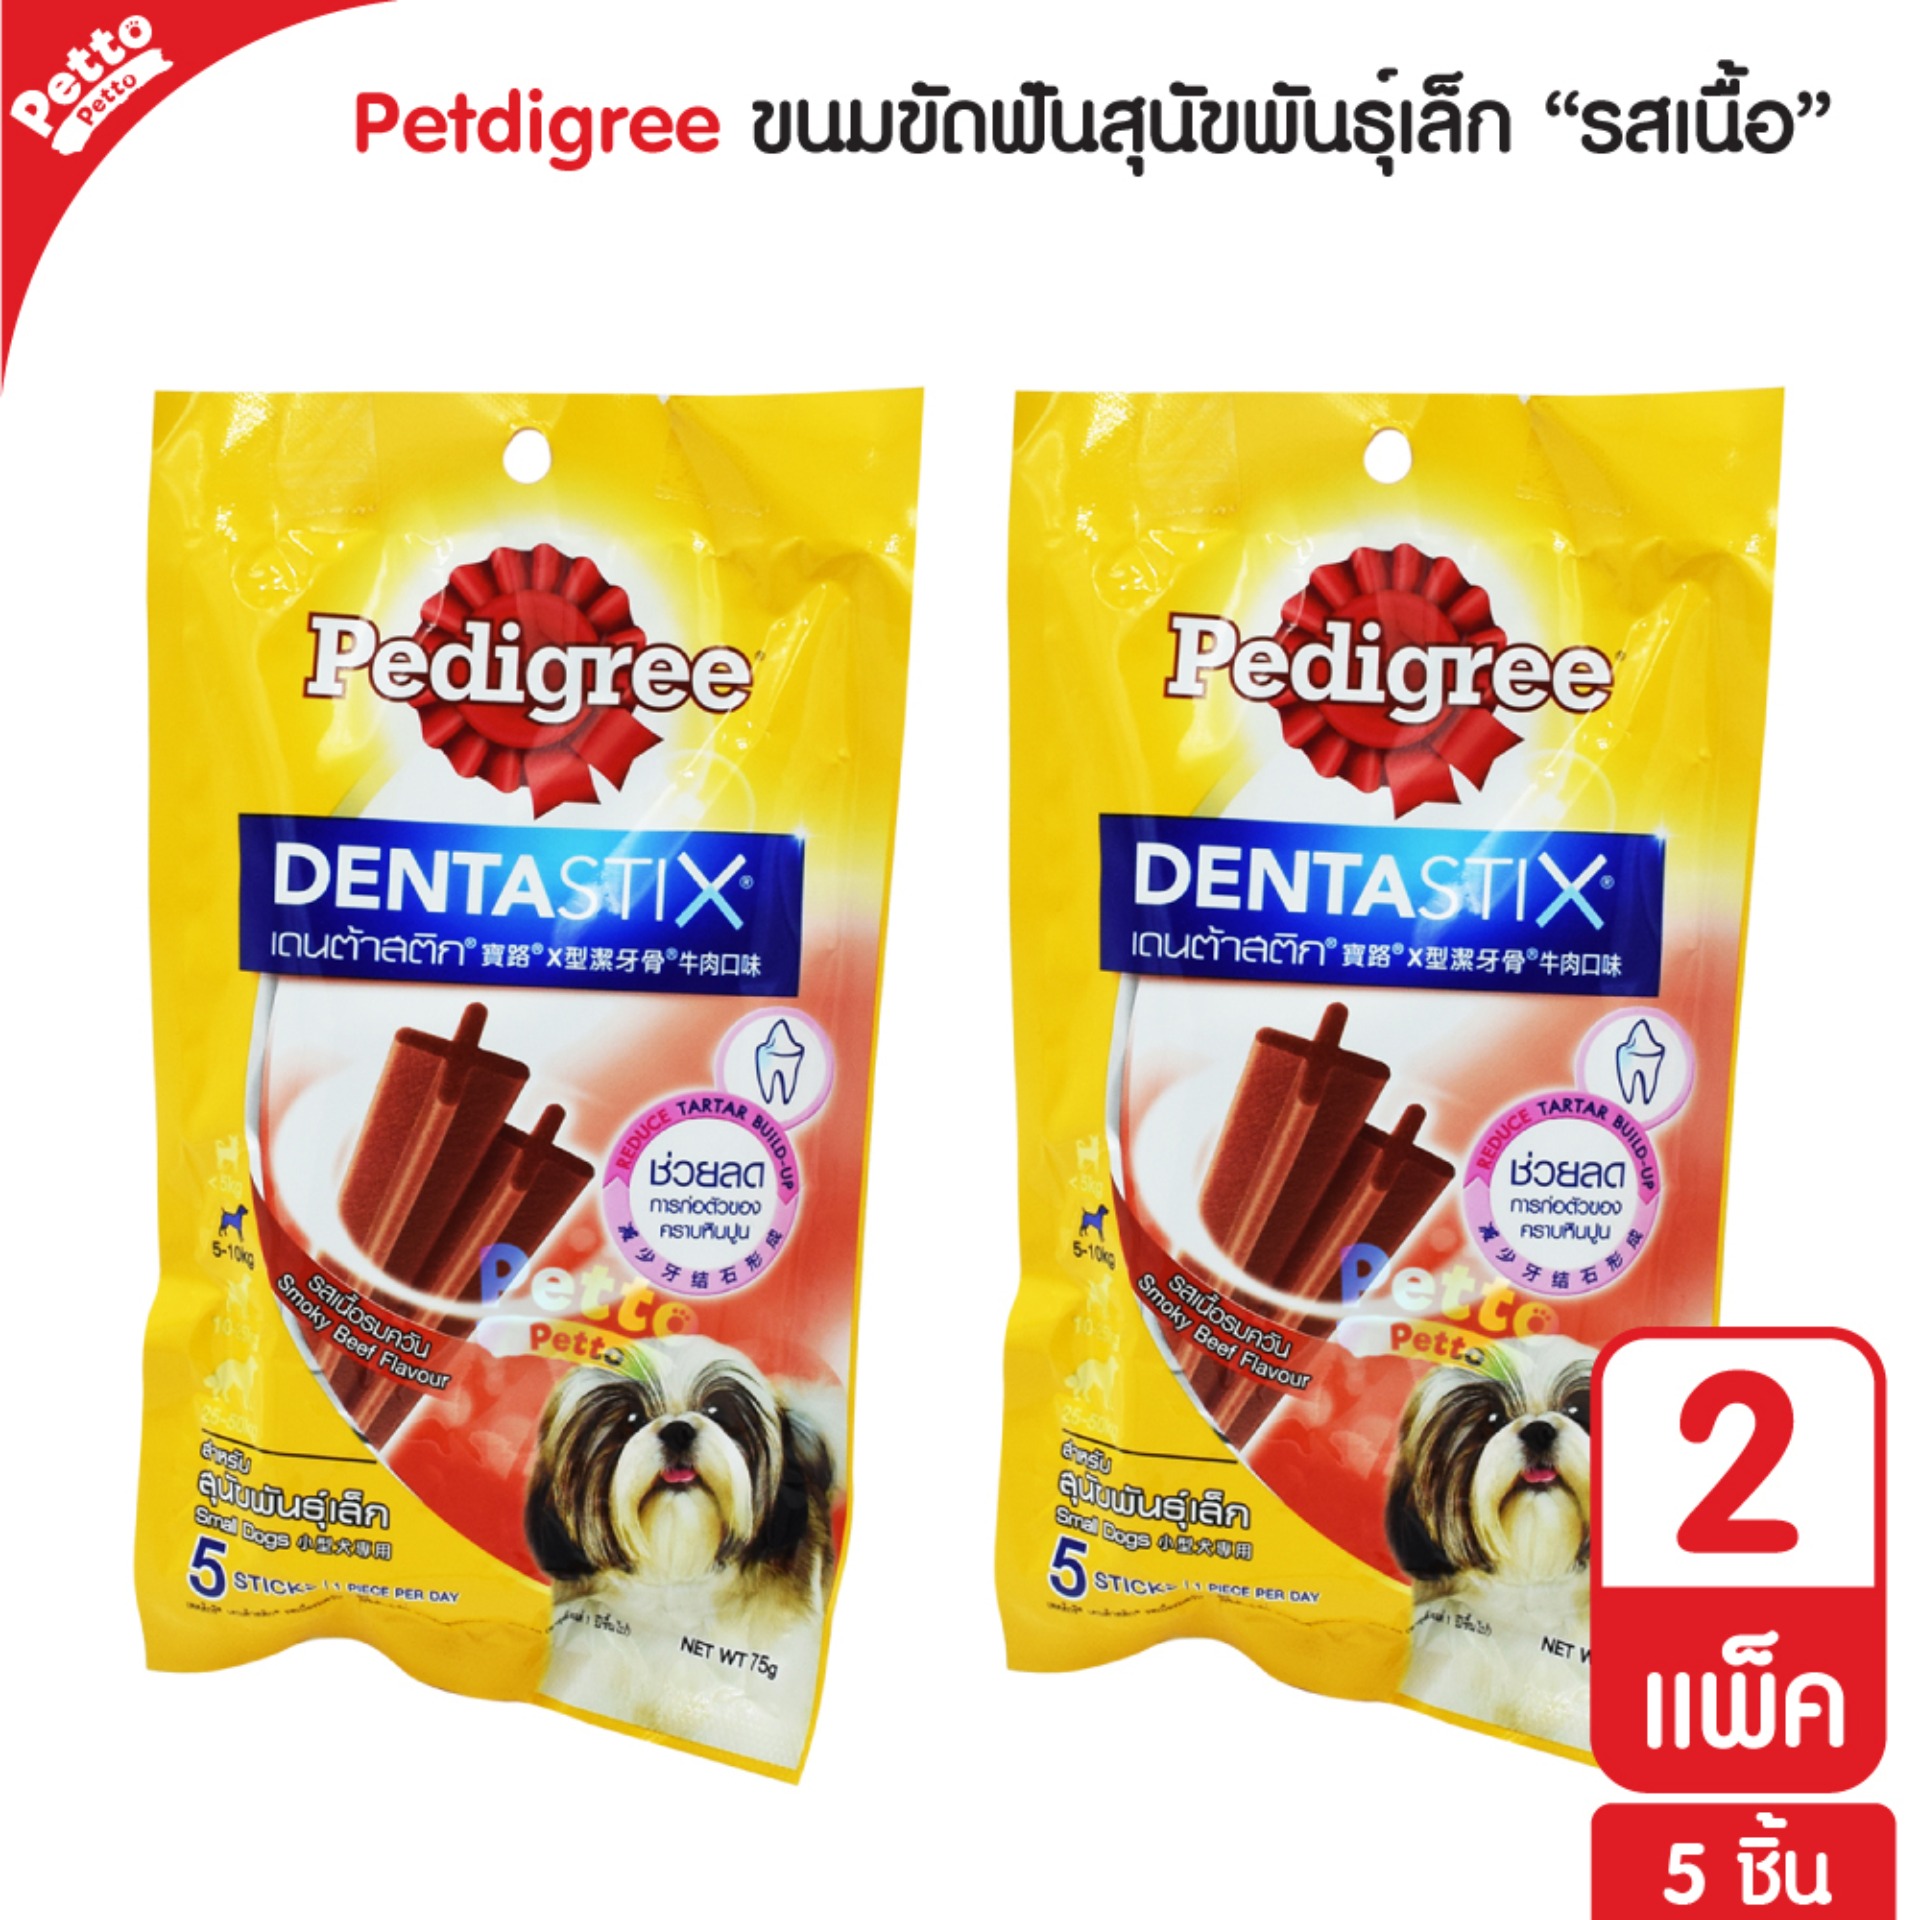 Pedigree Dentastix ขนมสุนัข ขัดฟัน รสเนื้อรมควัน ช่วยลดคราบหินปูน สำหรับสุนัขพันธุ์เล็ก (5 ชิ้น/แพ็ค) - 2 แพ็ค